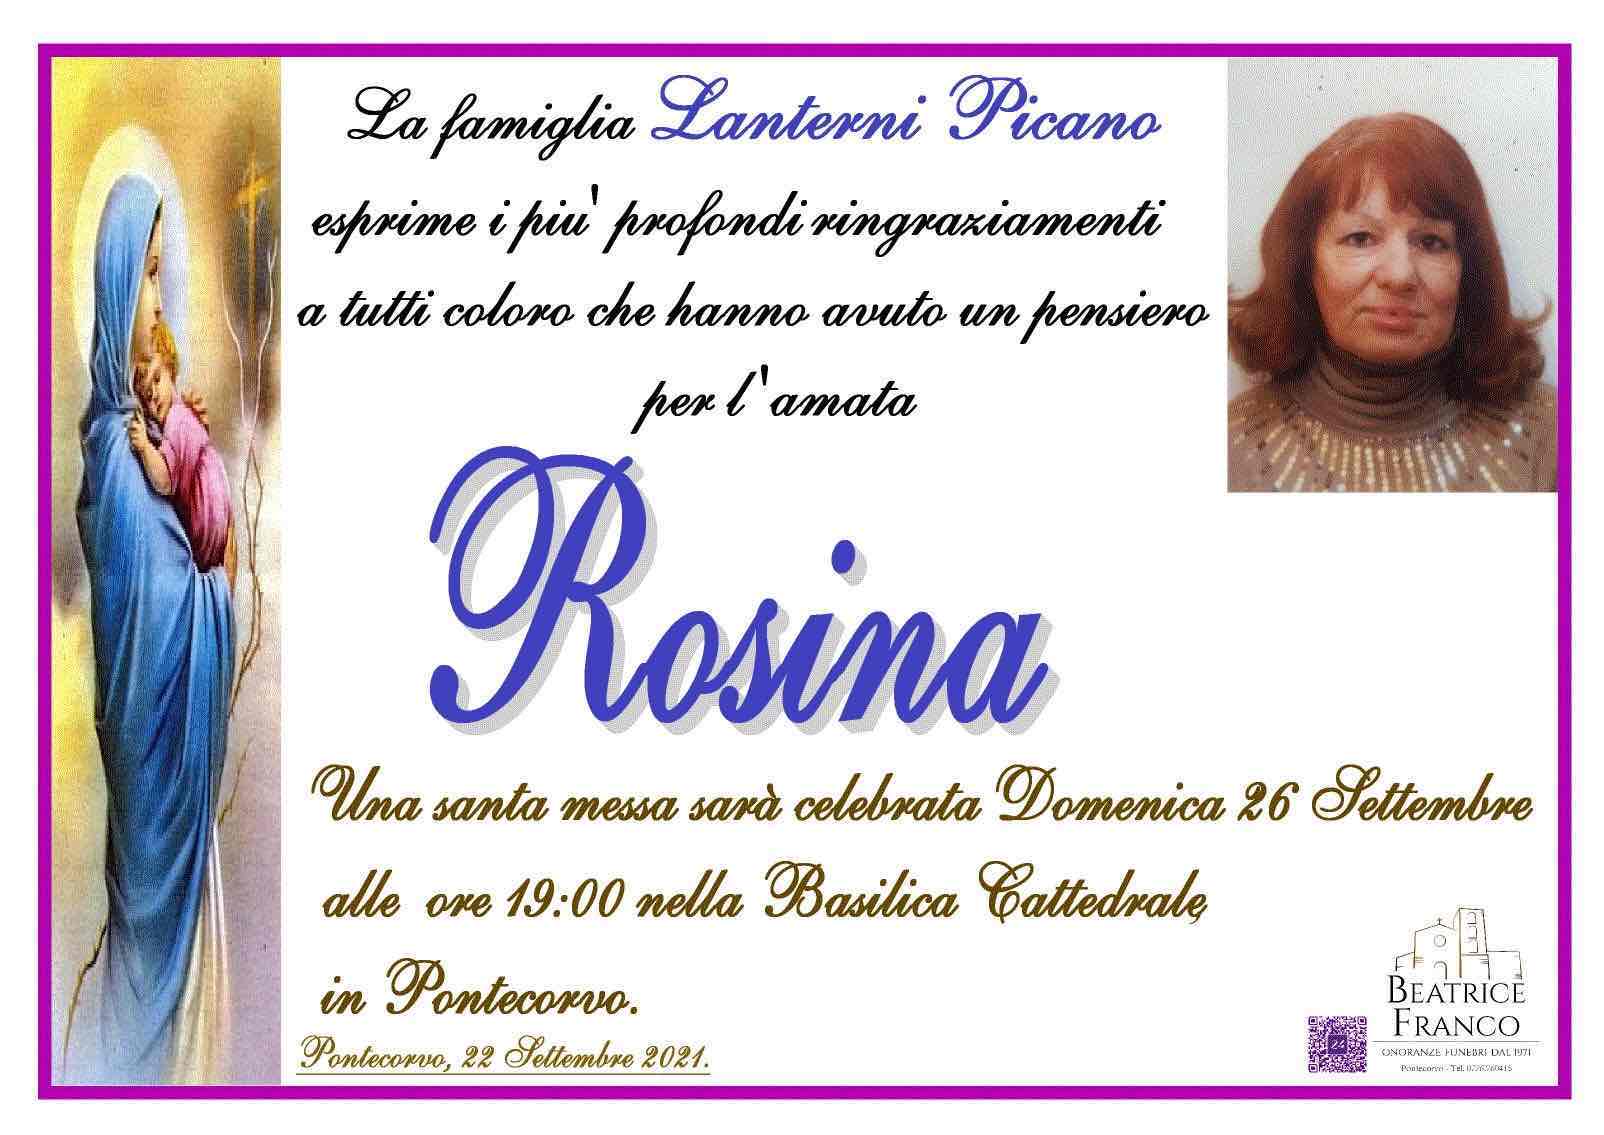 Rosina Picano